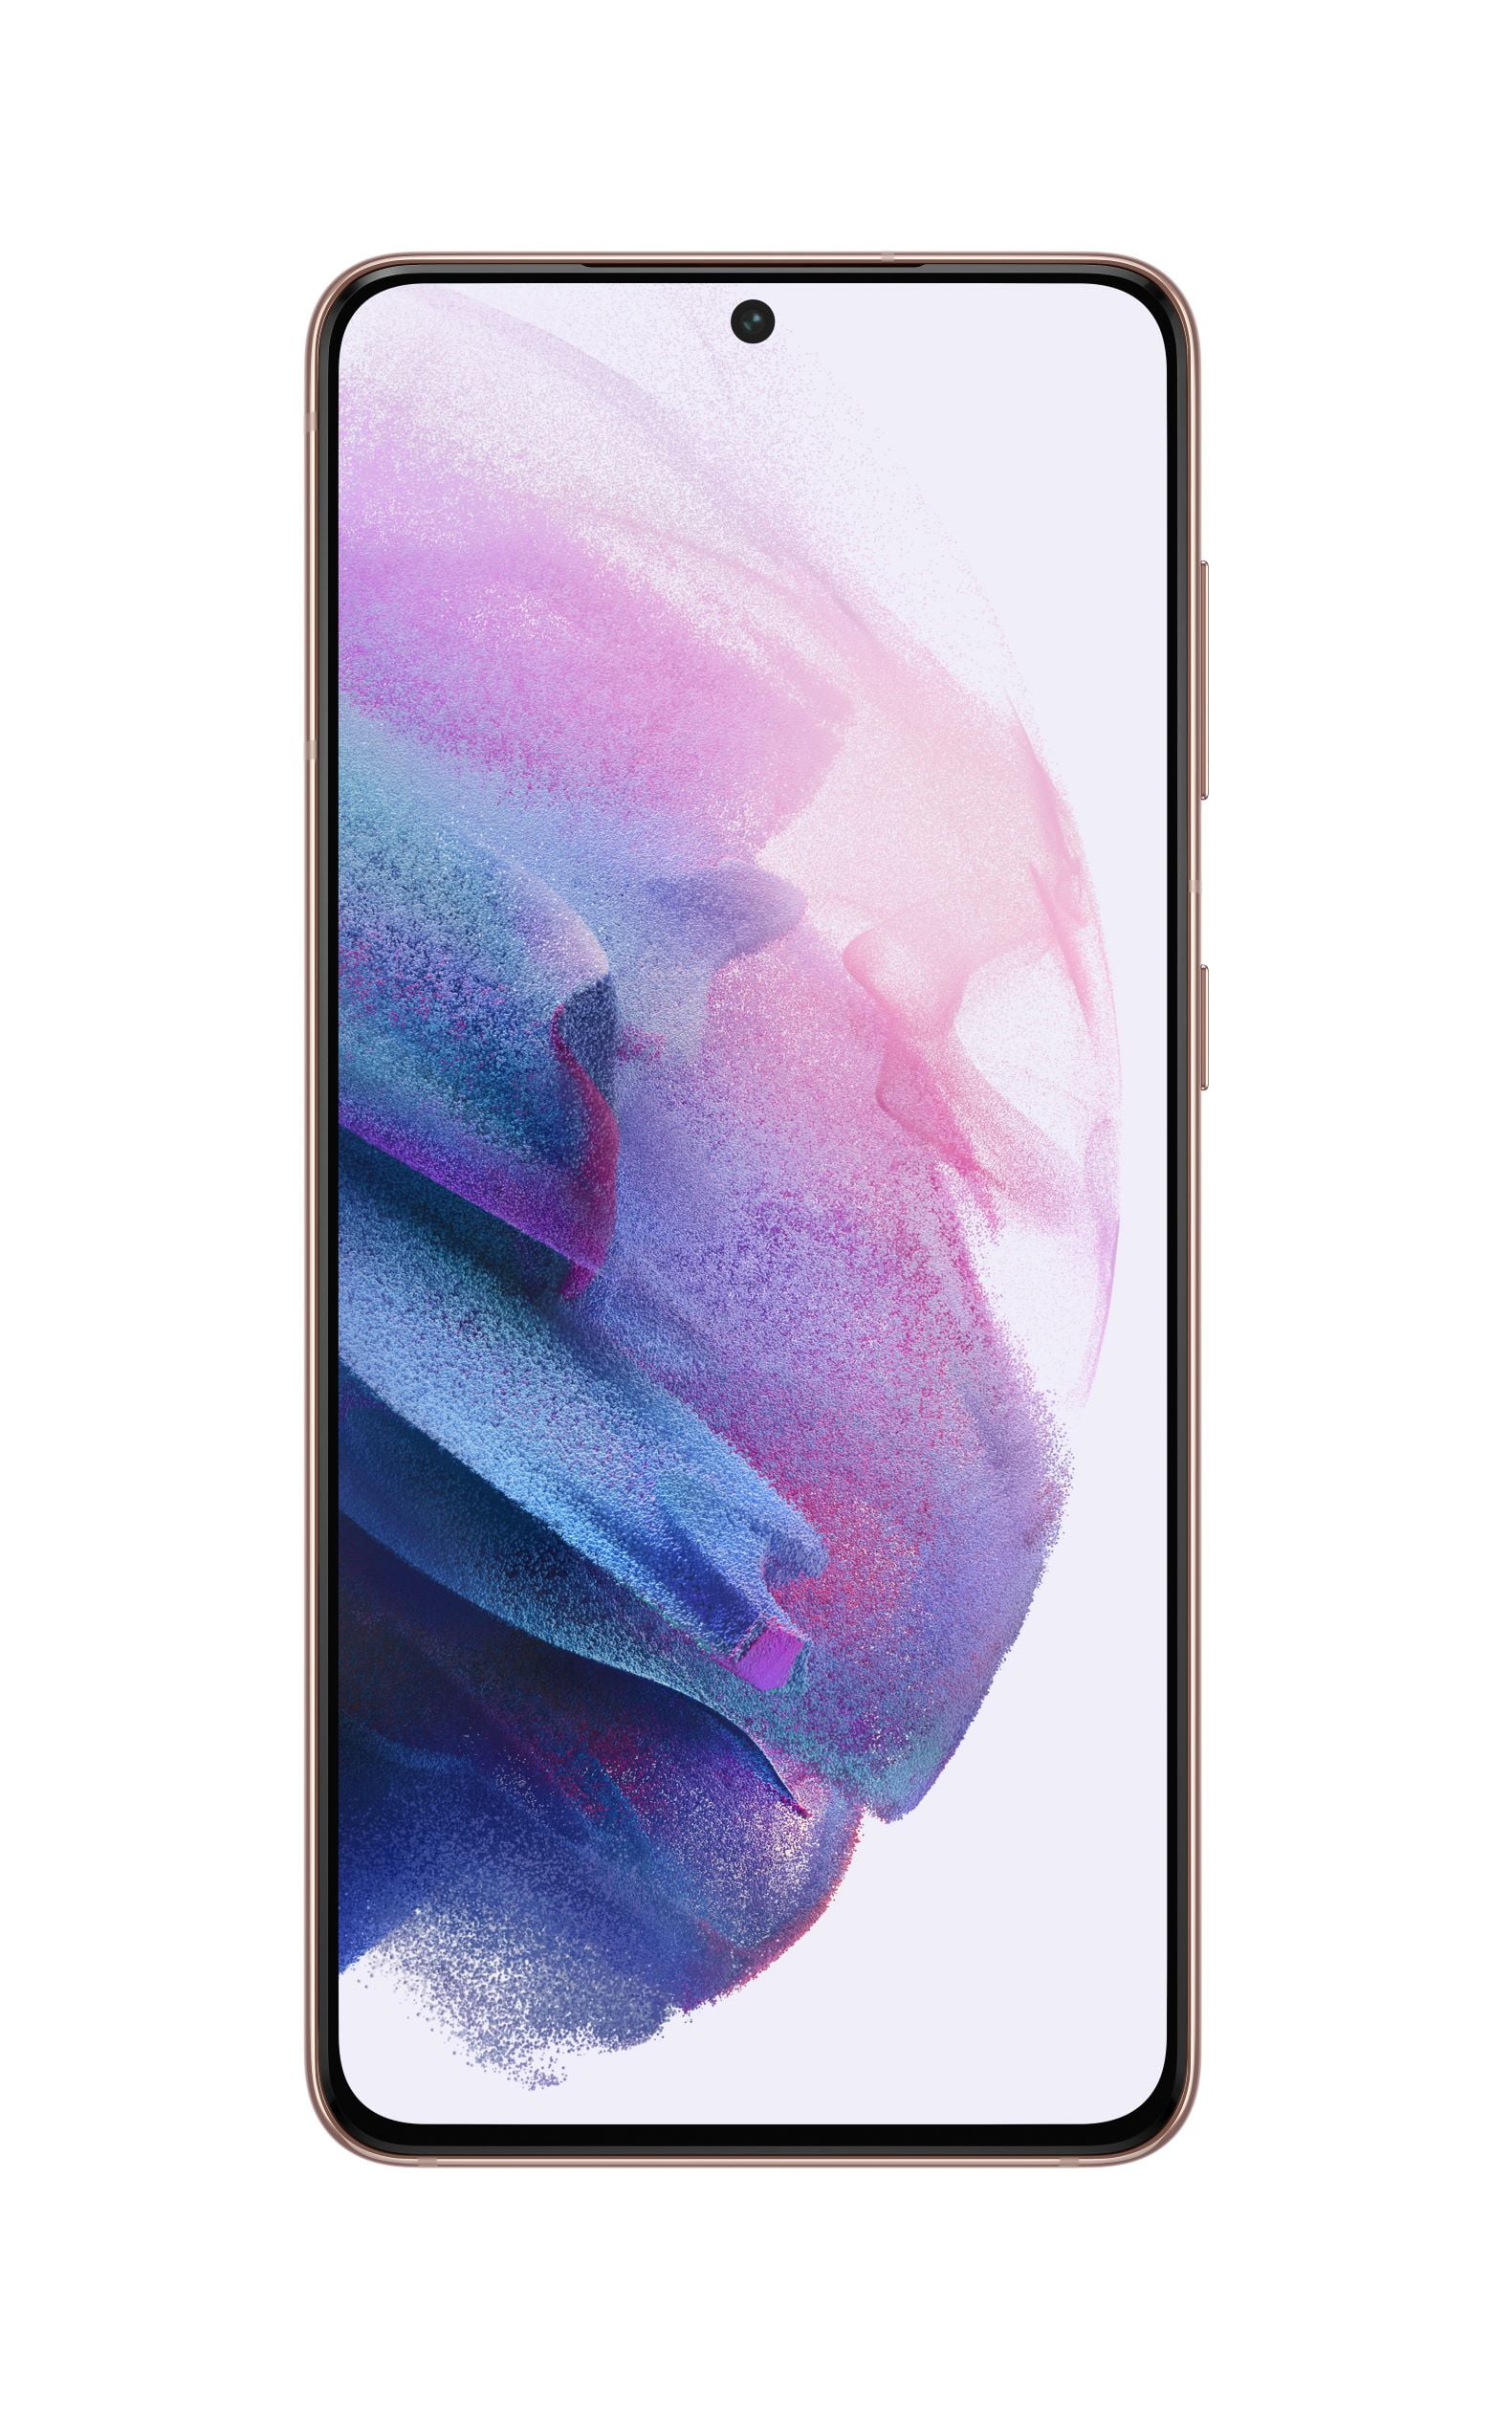 Samsung Galaxy S21 5G G991U 128GB Gray Smartphone for Boost